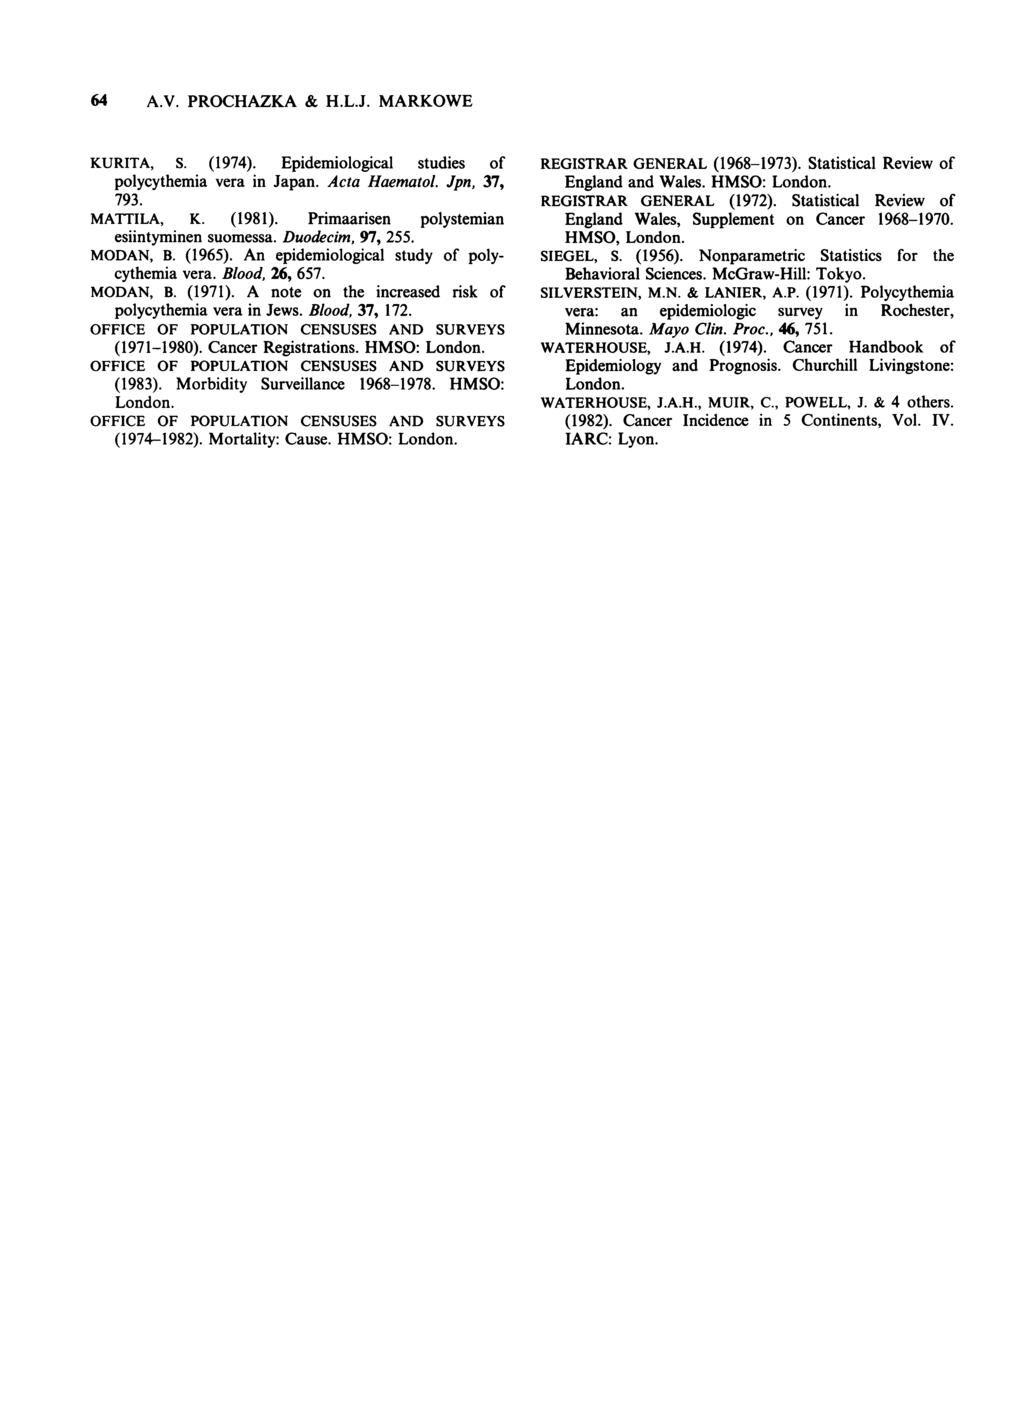 64 A.V. PROCHAZKA & H.L.J. MARKOWE KURITA, S. (1974). Epidemiological studies of polycythemia vera in Japan. Acta Haematol. Jpn, 37, 793. MATTILA, K. (1981).